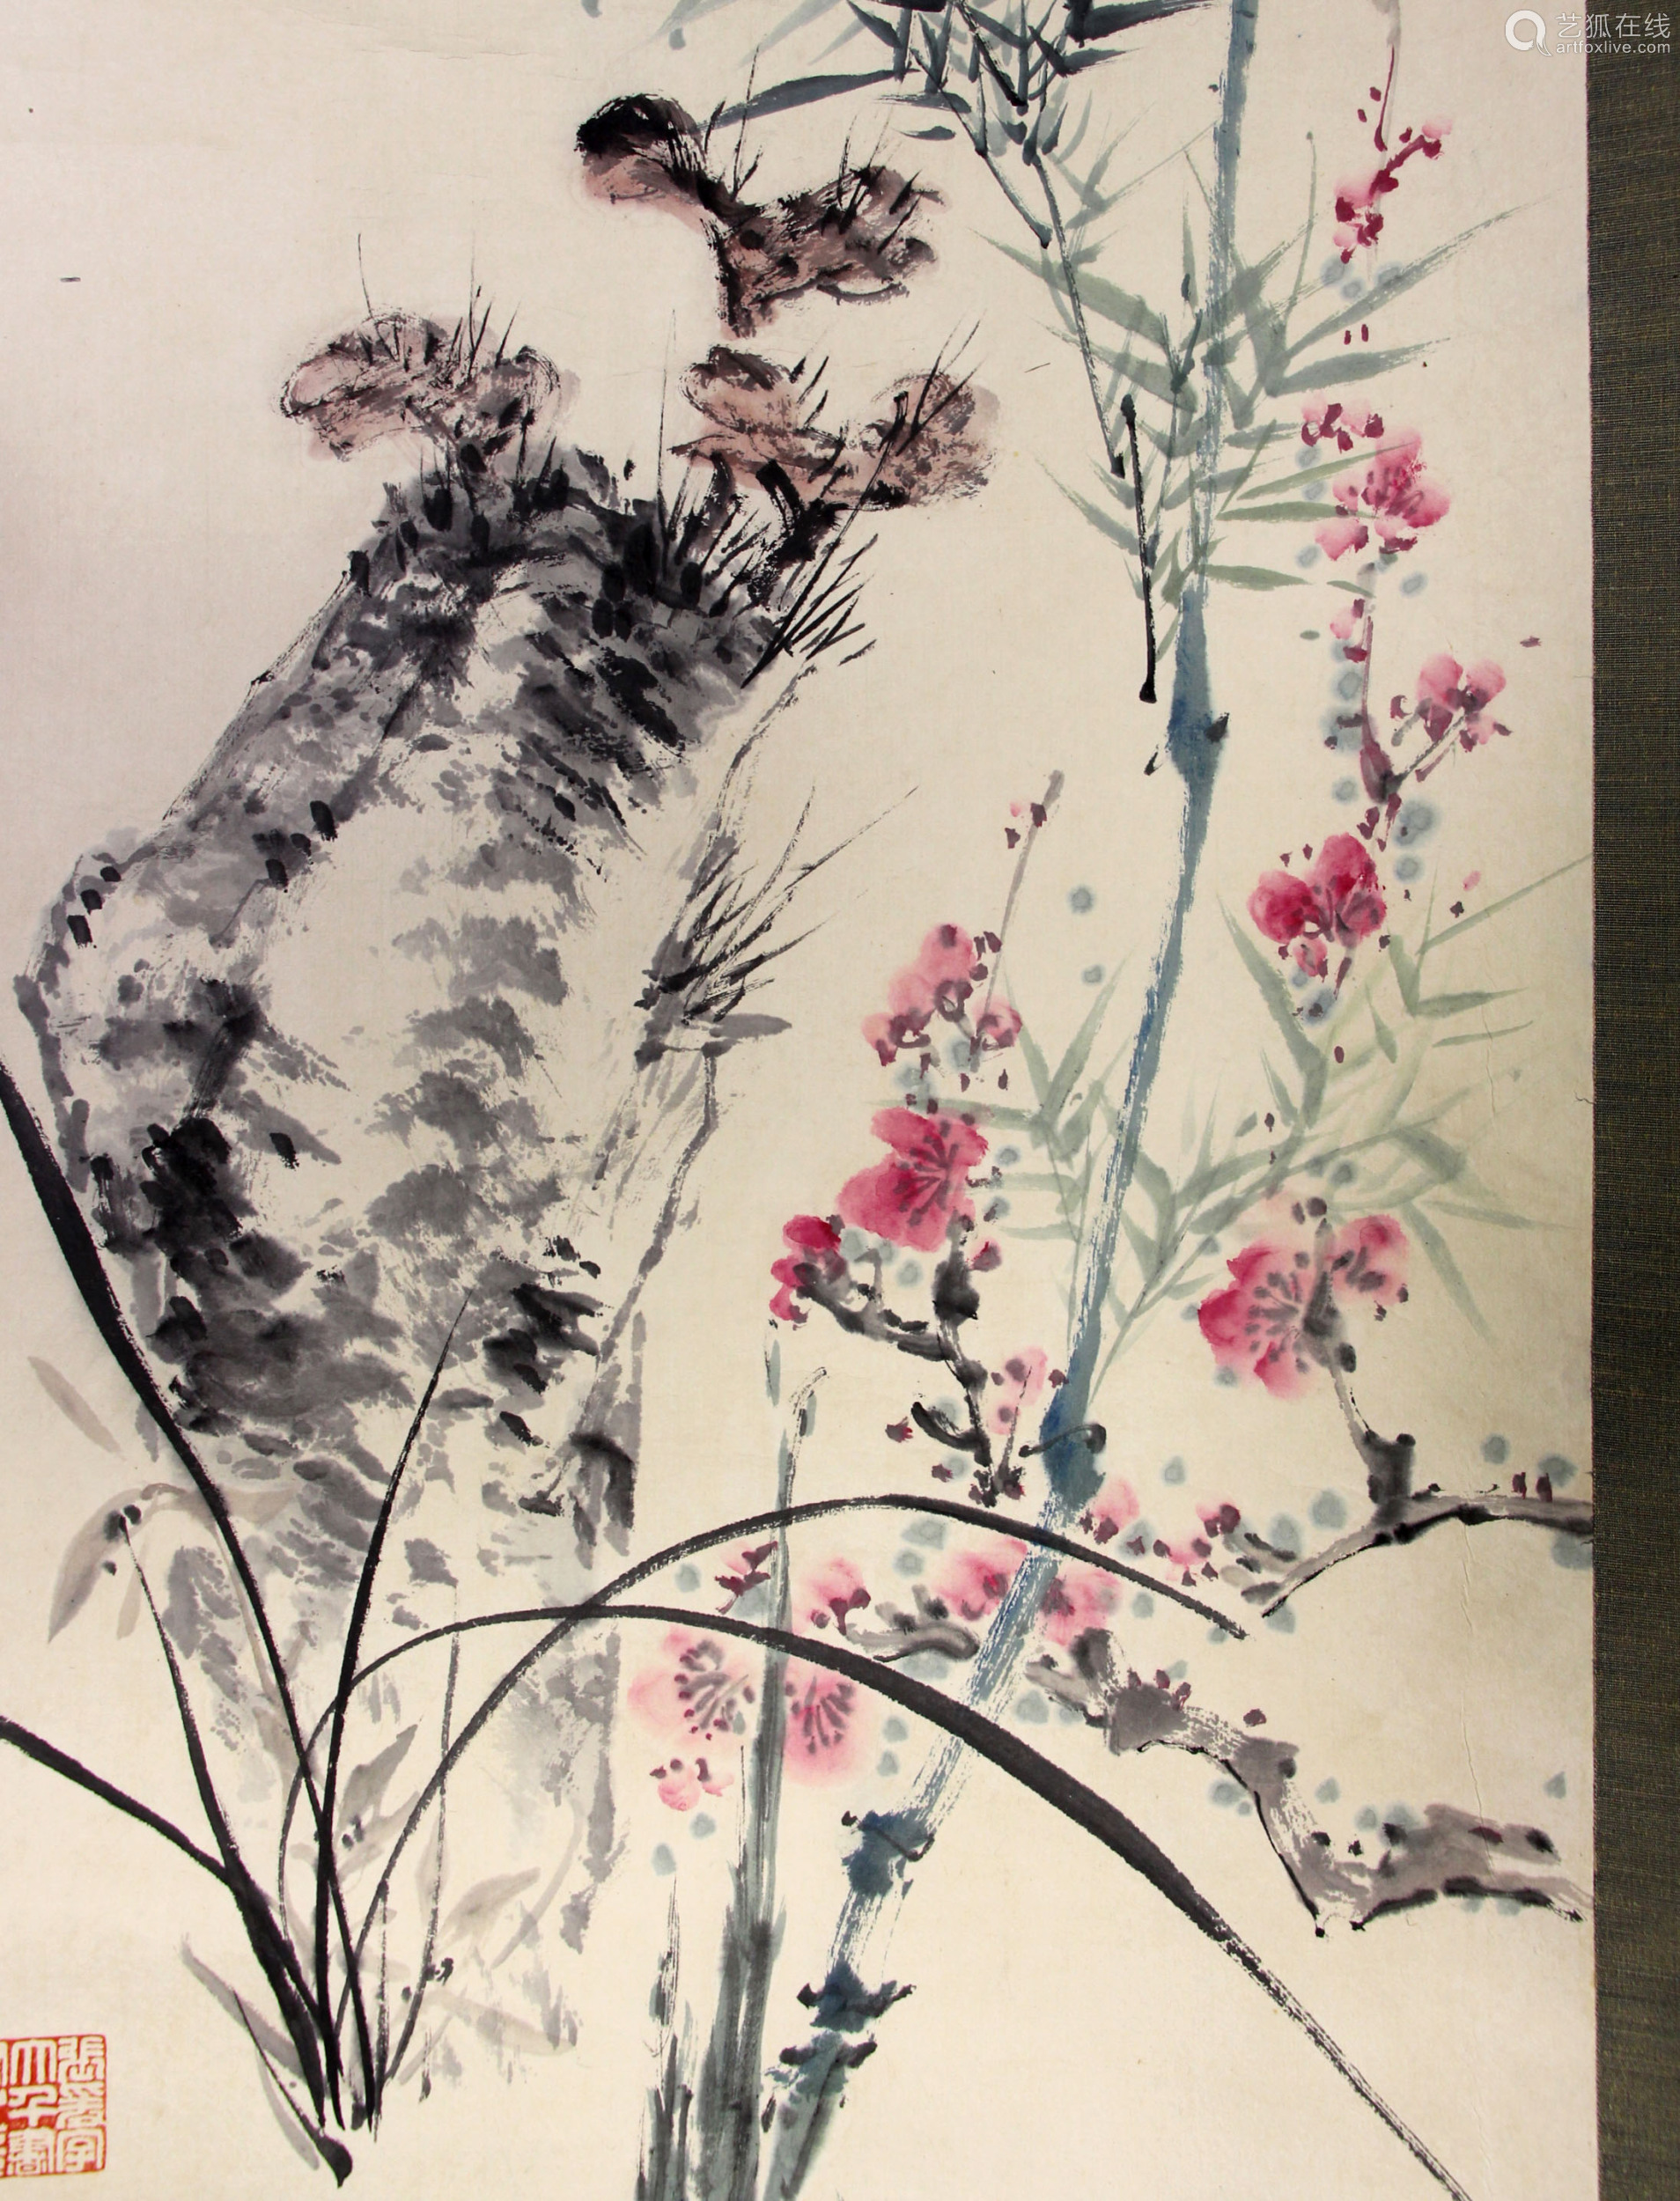 Chinese ink painting,
Zhang Daqian's flower paintings